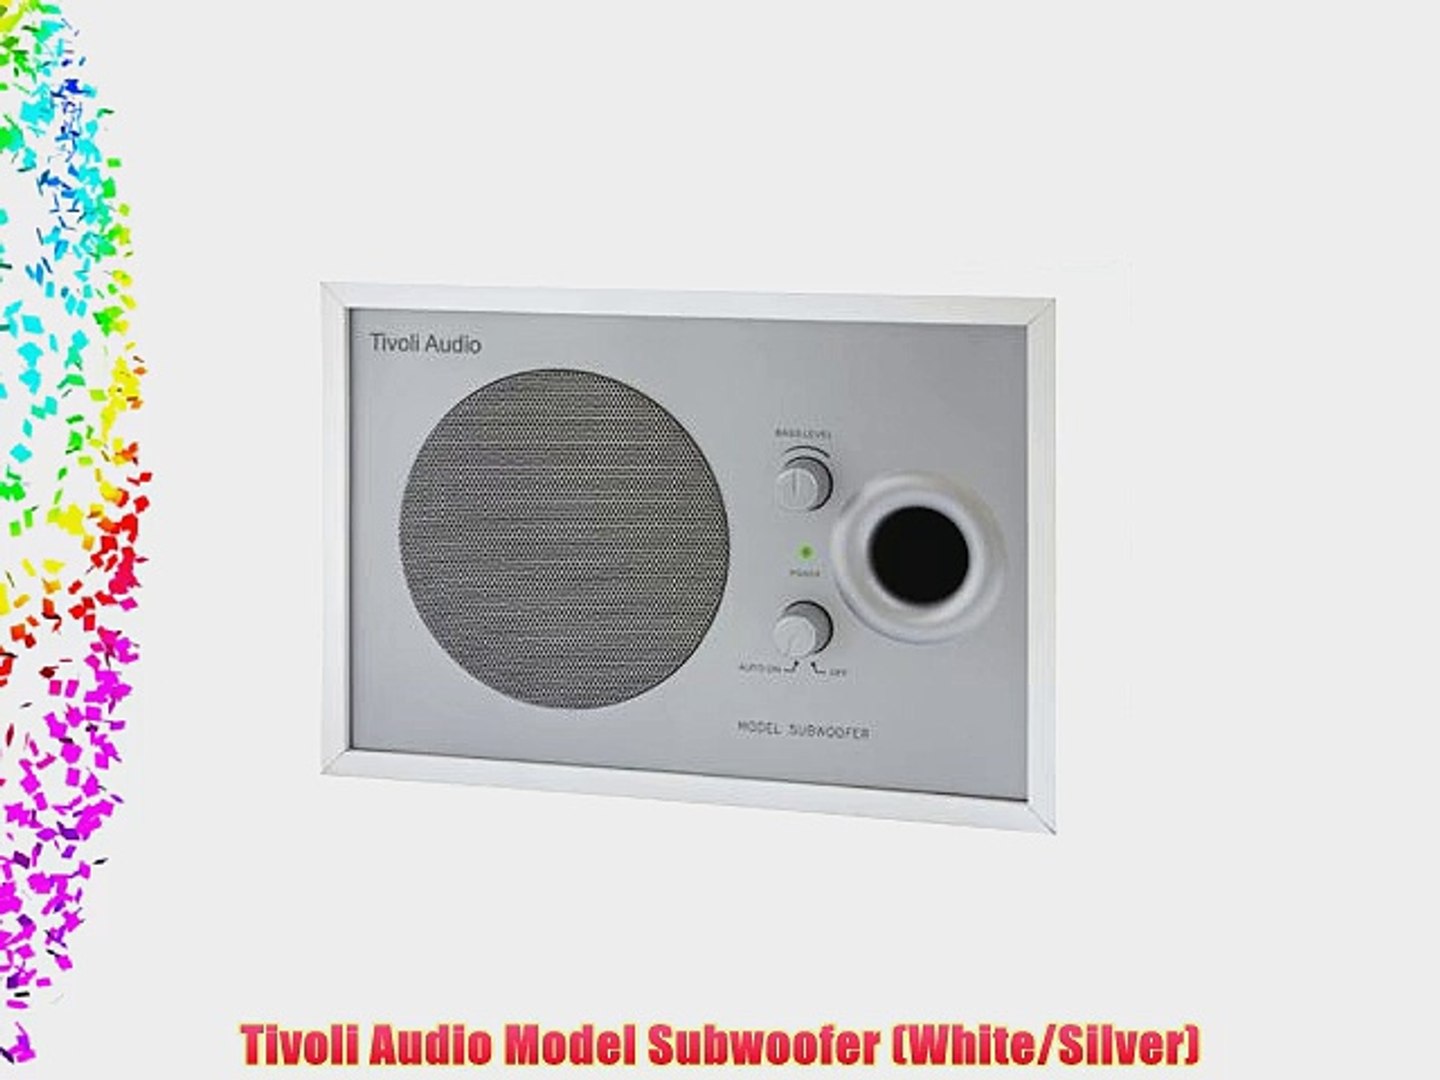 Tivoli Audio Model Subwoofer (White/Silver) - video Dailymotion